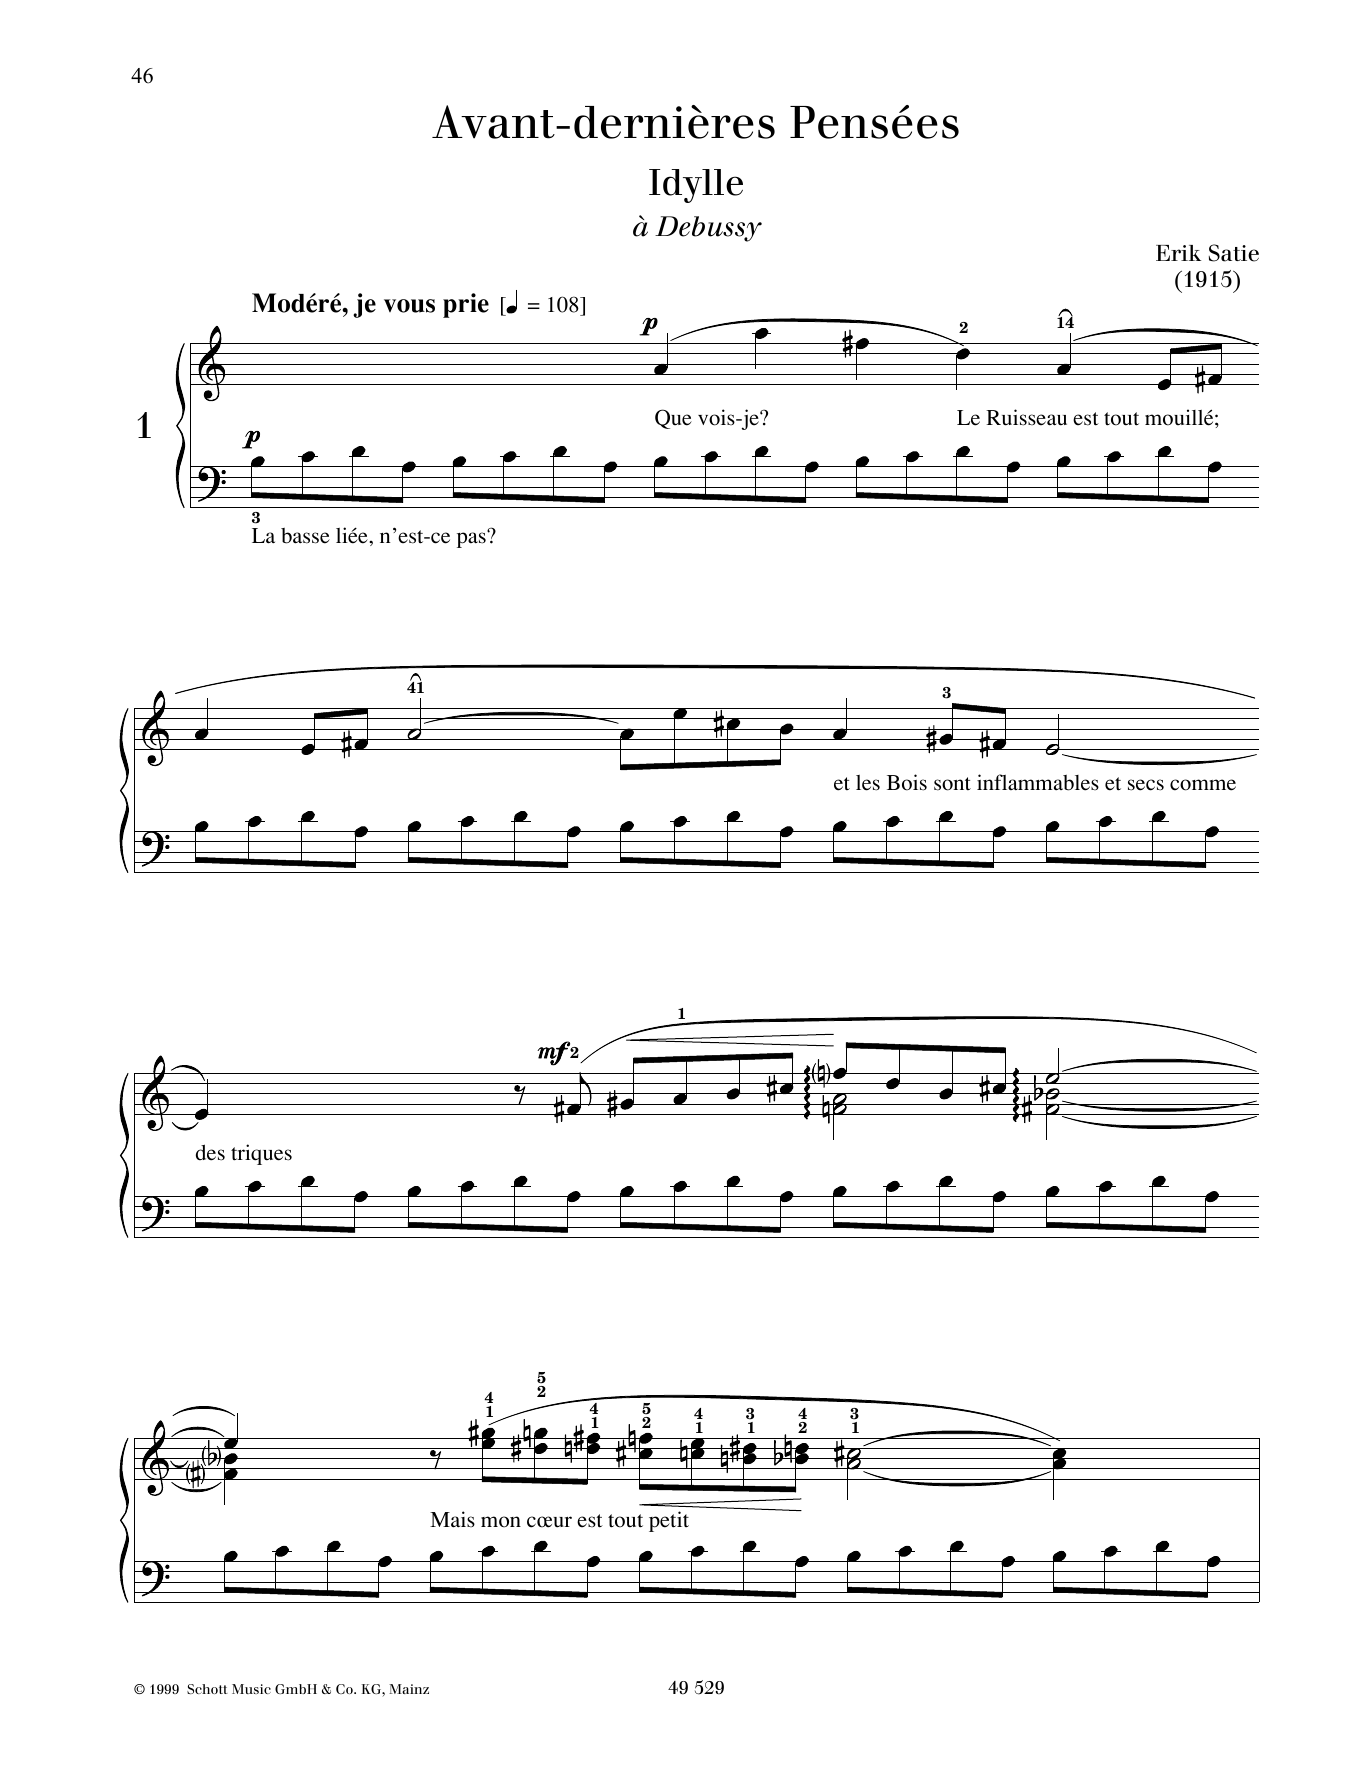 Download Erik Satie Idylle Sheet Music